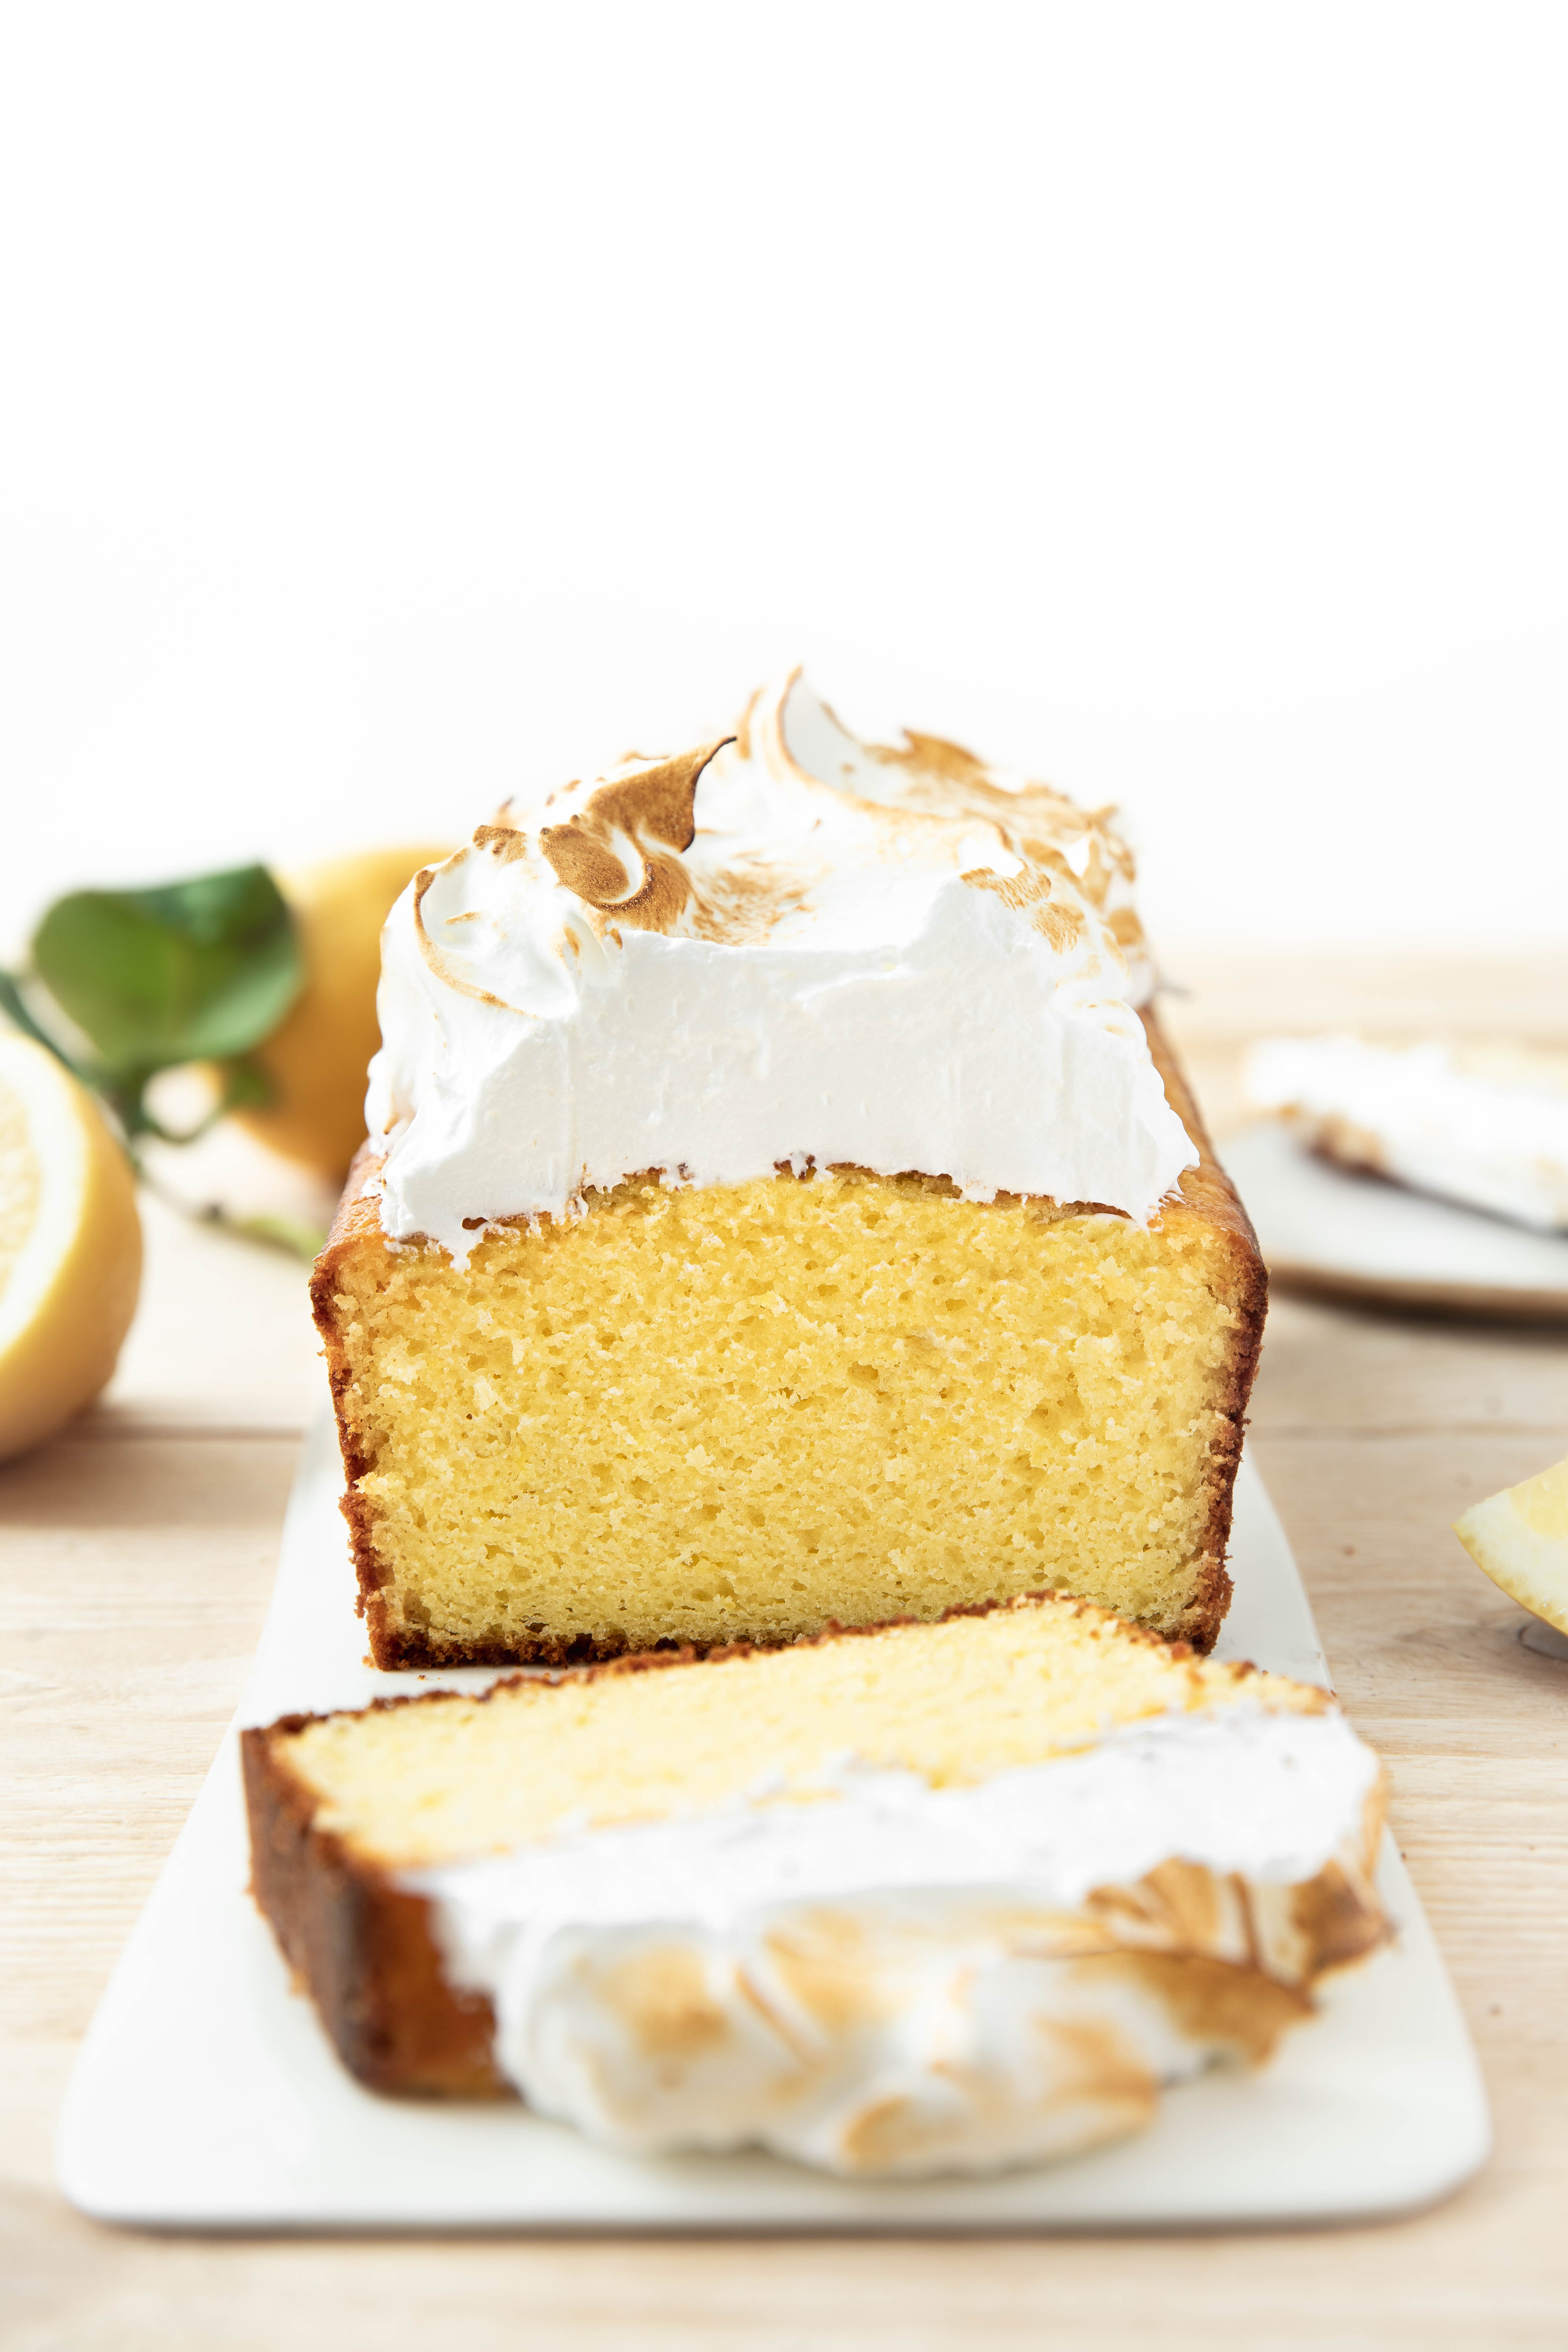 Cake au citron meringué - lemon cake photography